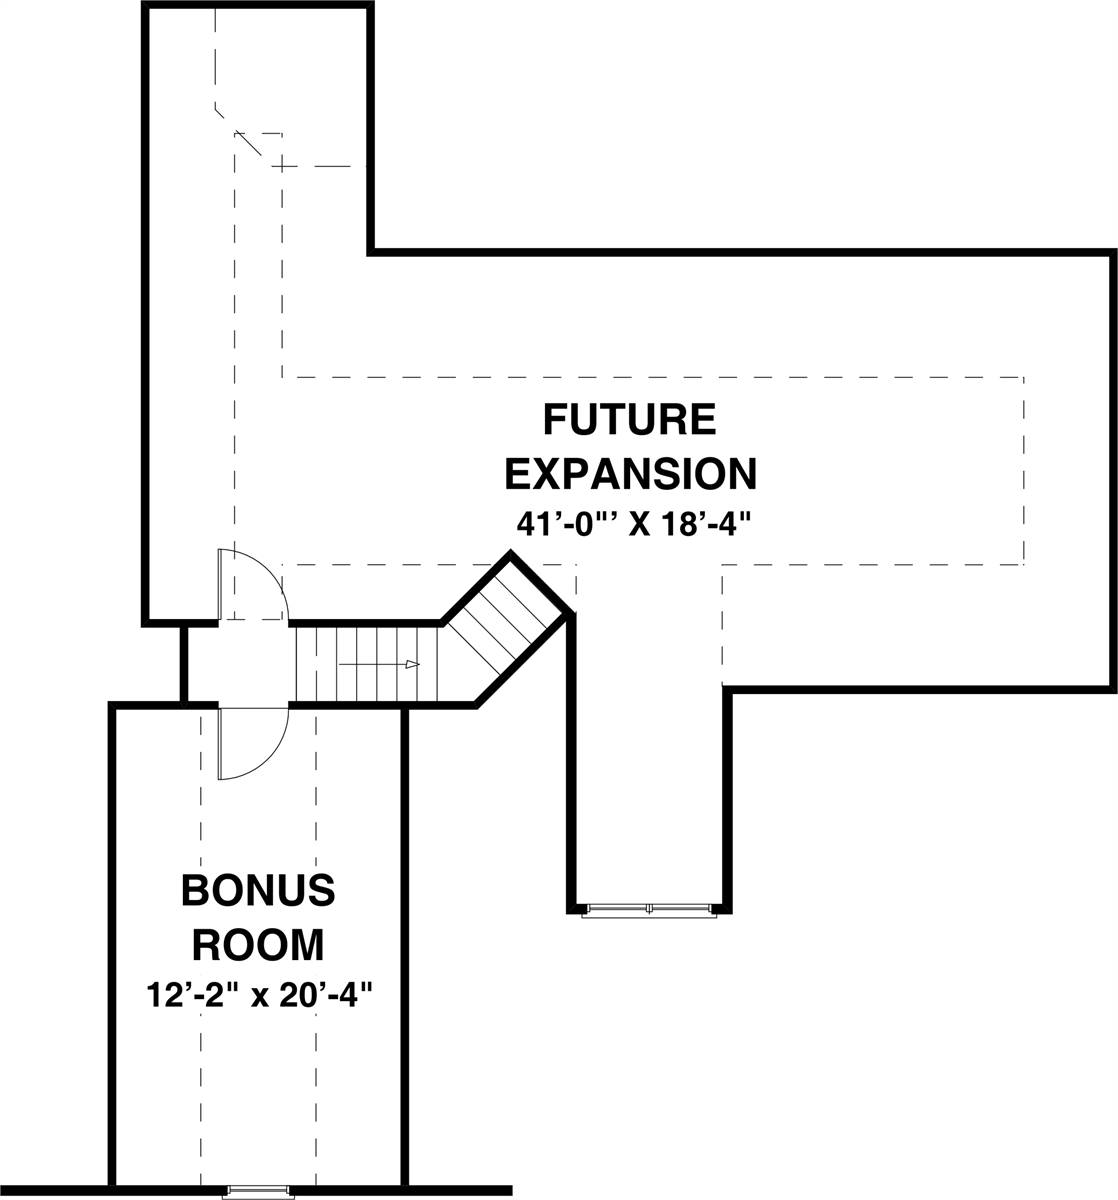 Bonus Room image of The Falls Church House Plan